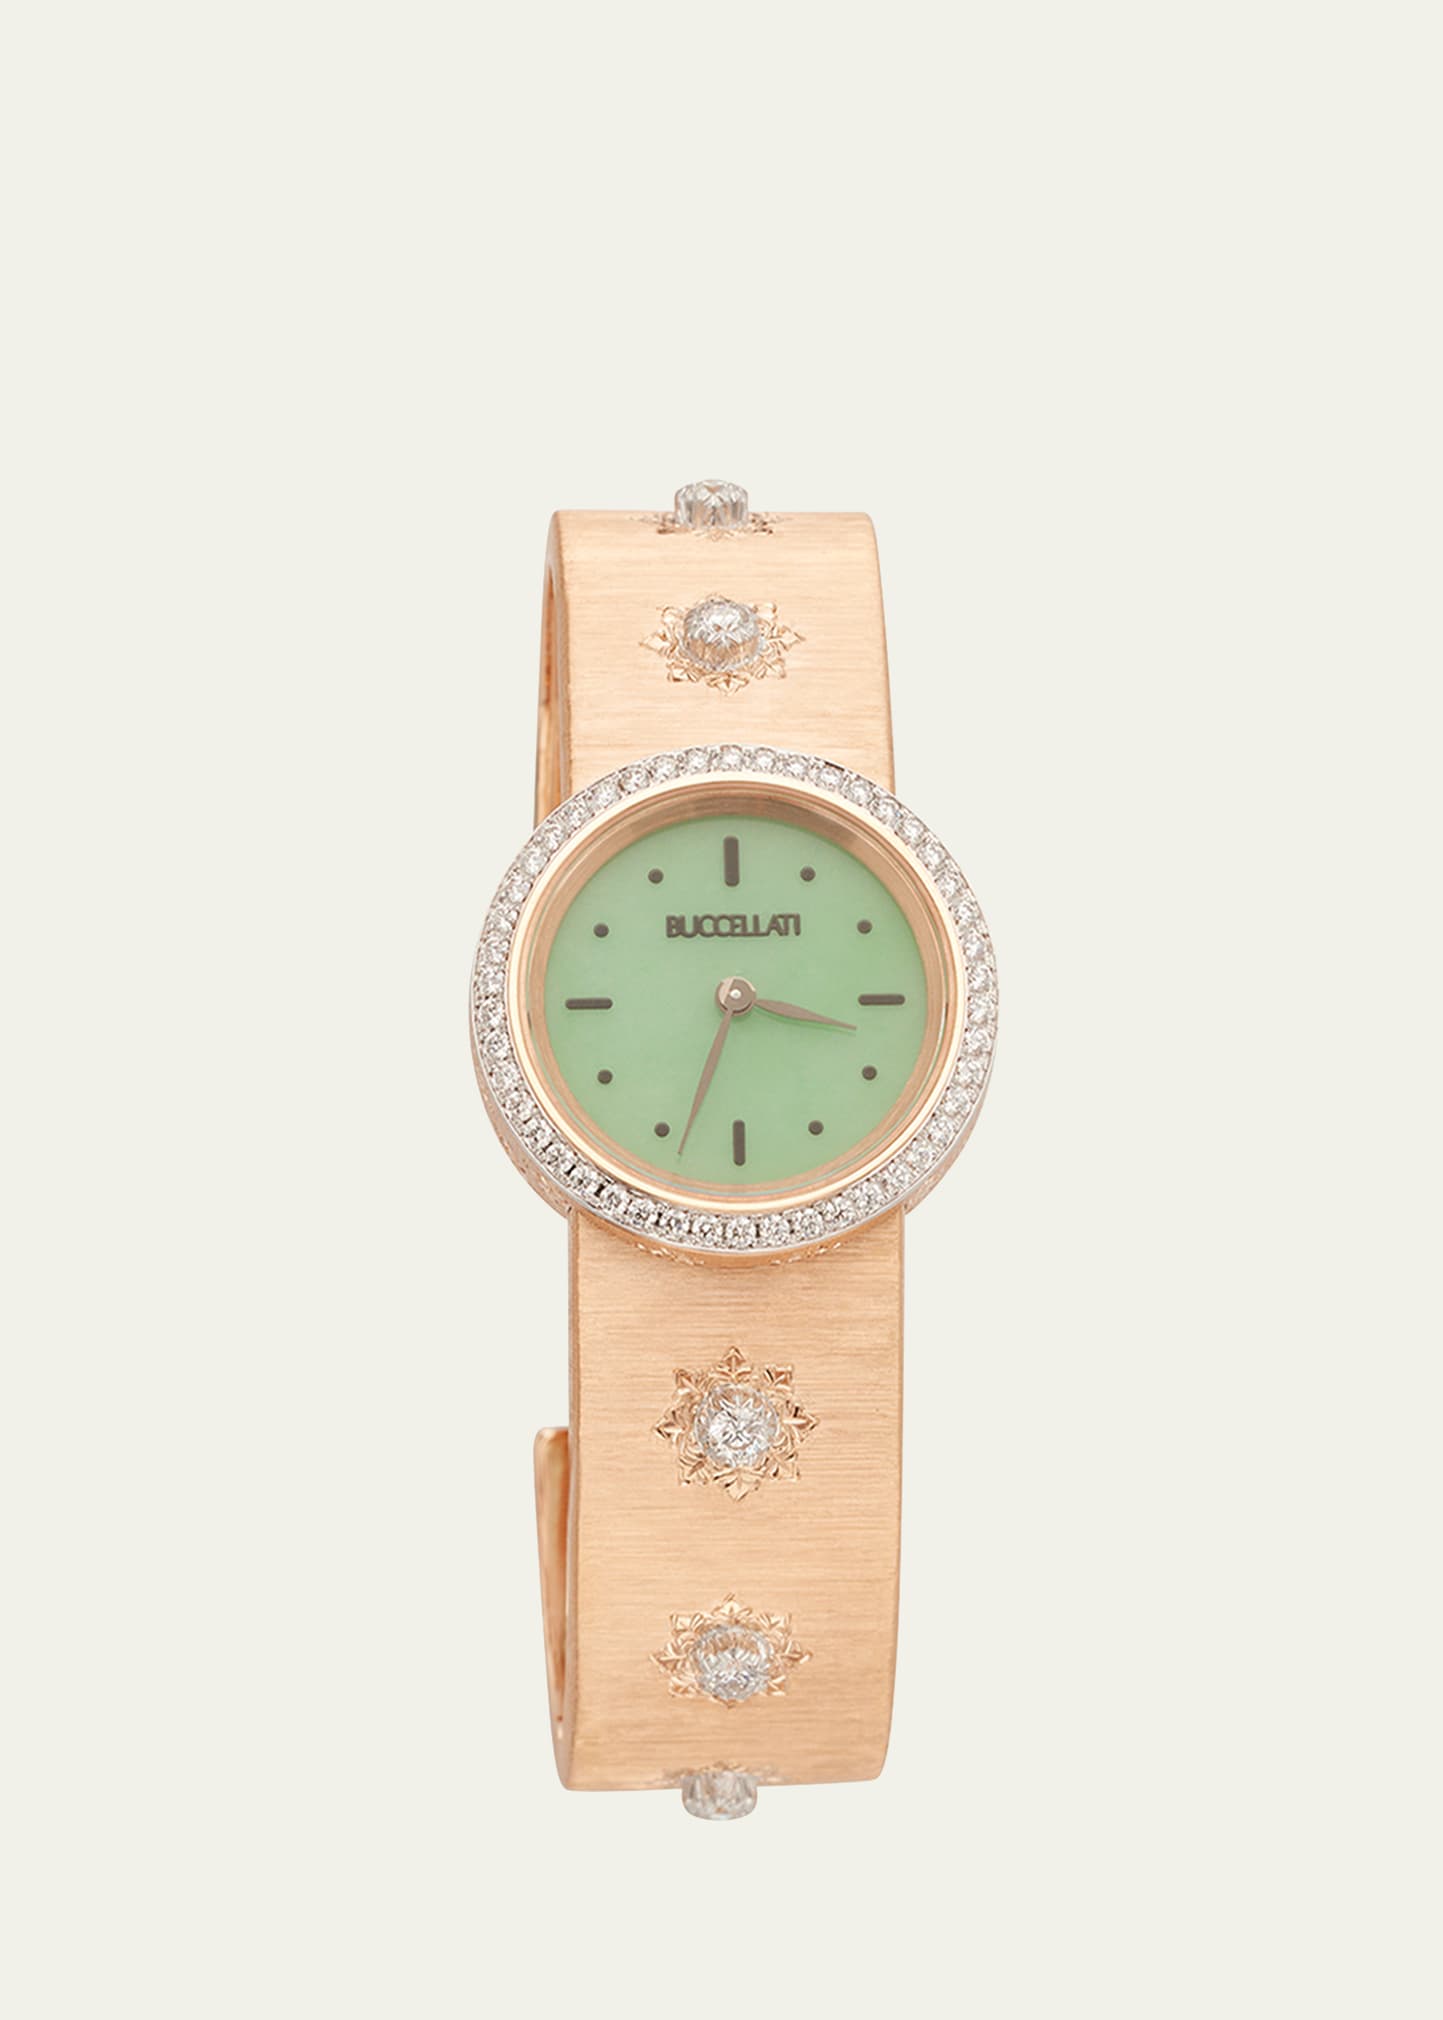 Buccellati Macri 18k Pink Gold, Jade and Diamond Watch